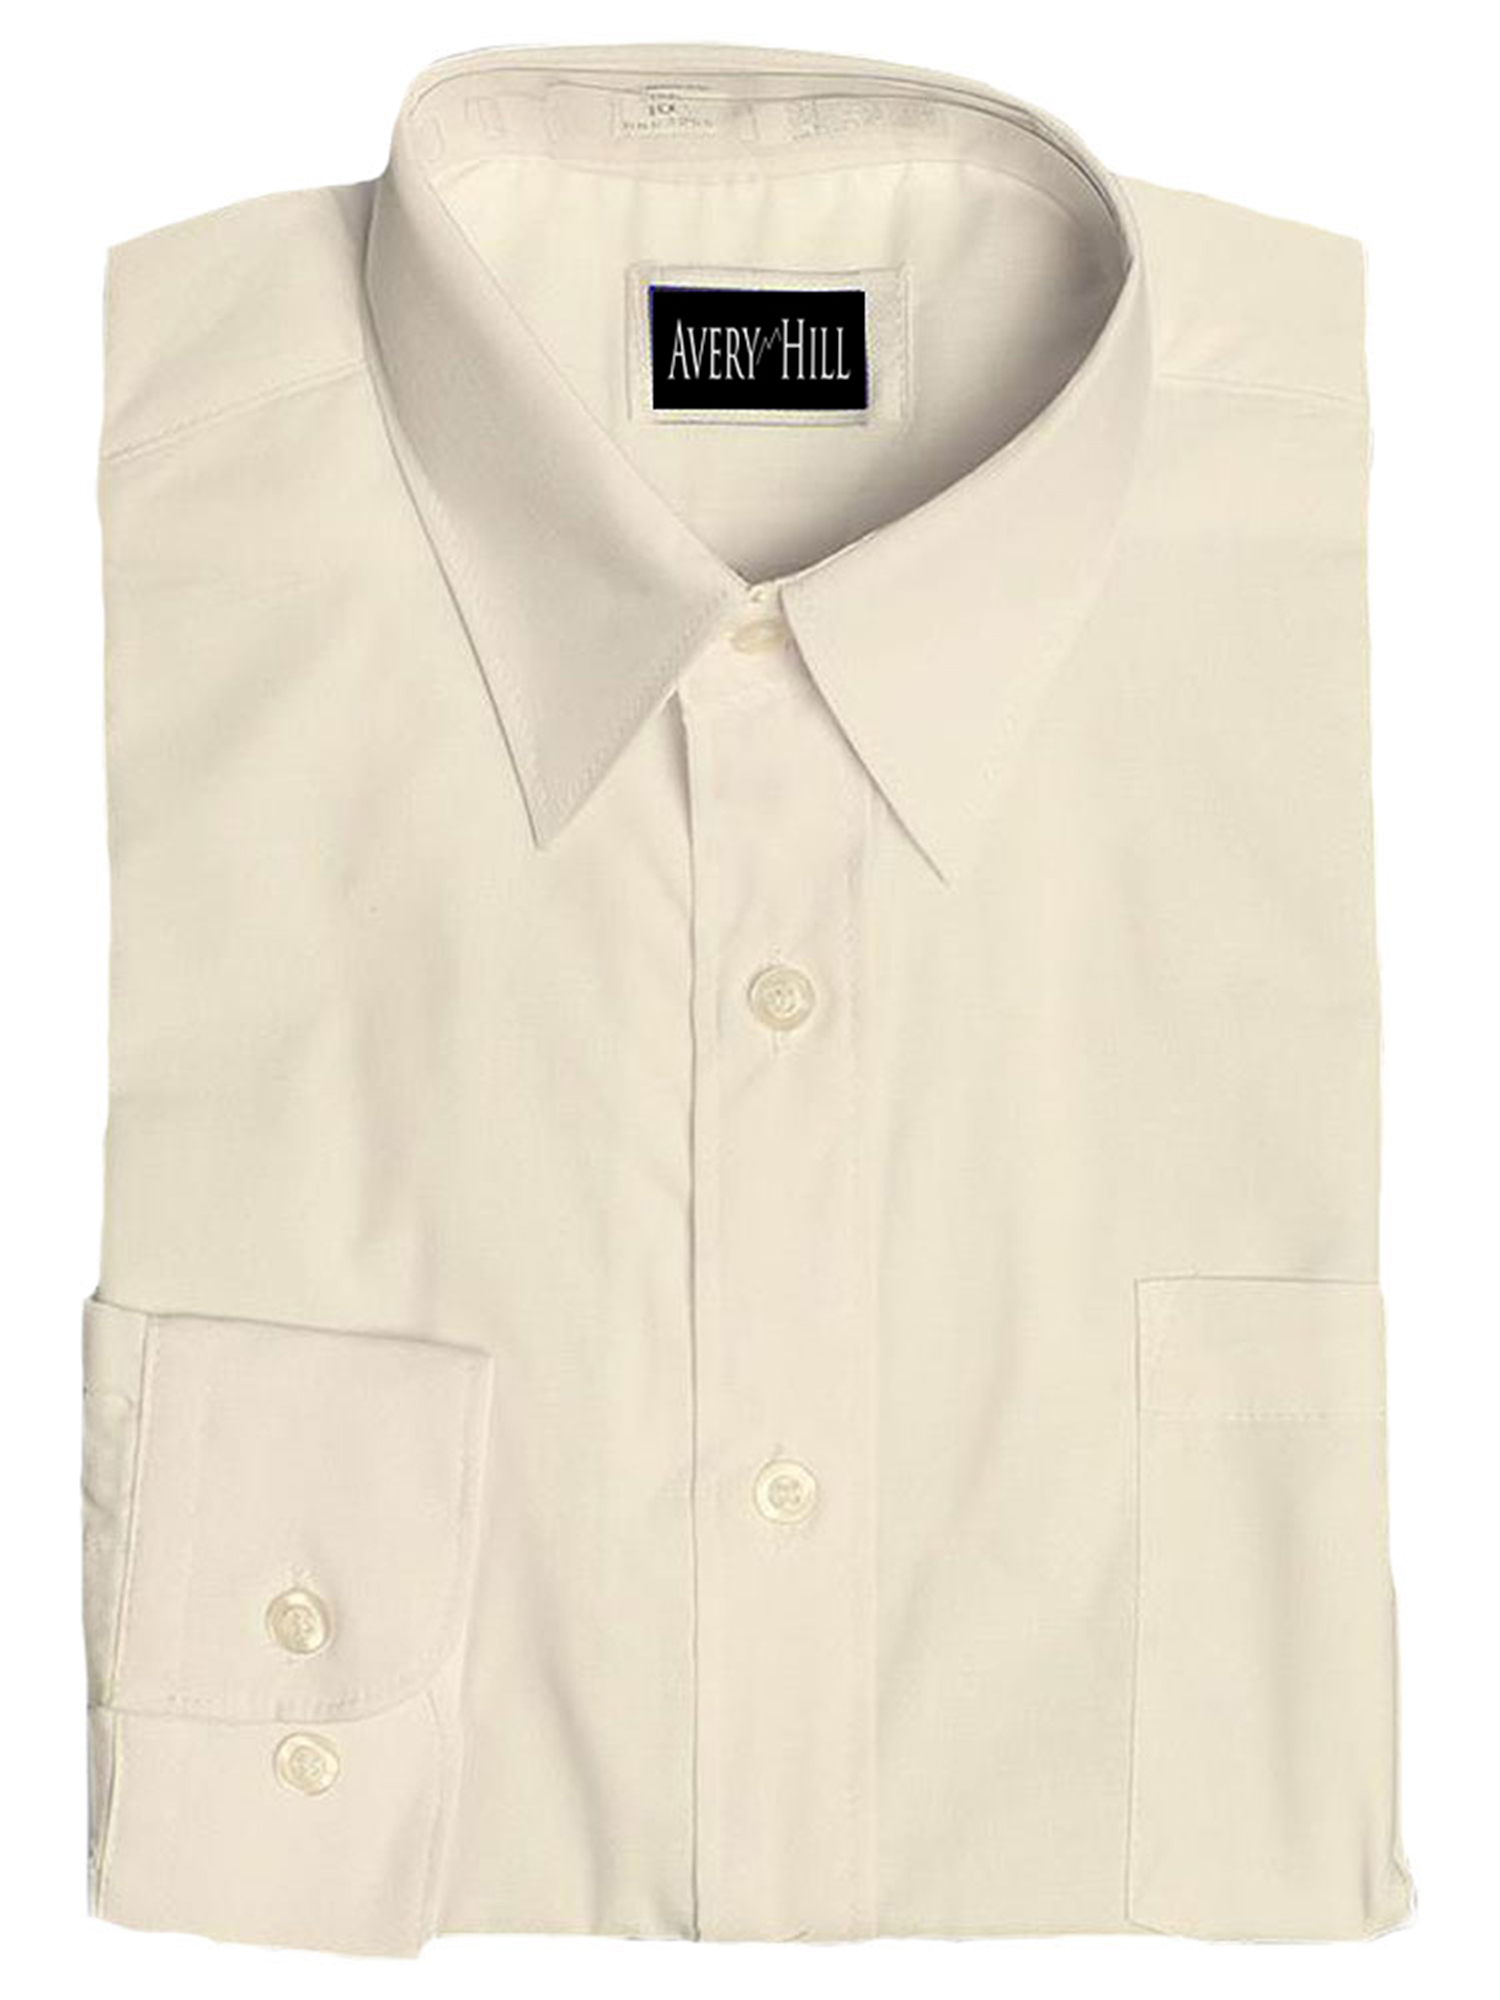 Boys White or Ivory Long Sleeve Wrinkle Resistant Dress Shirt IV XL